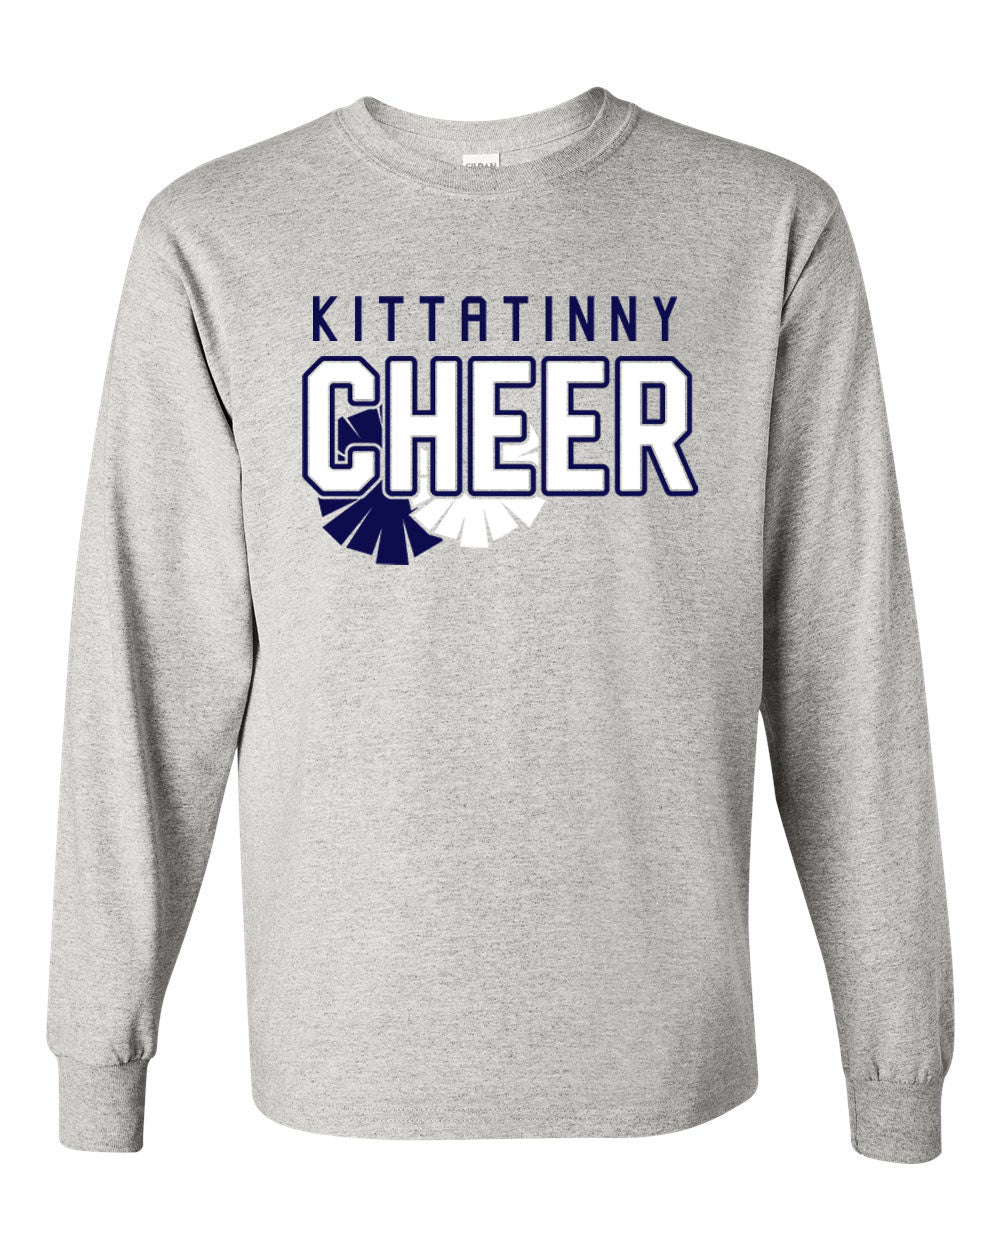 Kittatinny Cheer Design 4 Long Sleeve Shirt